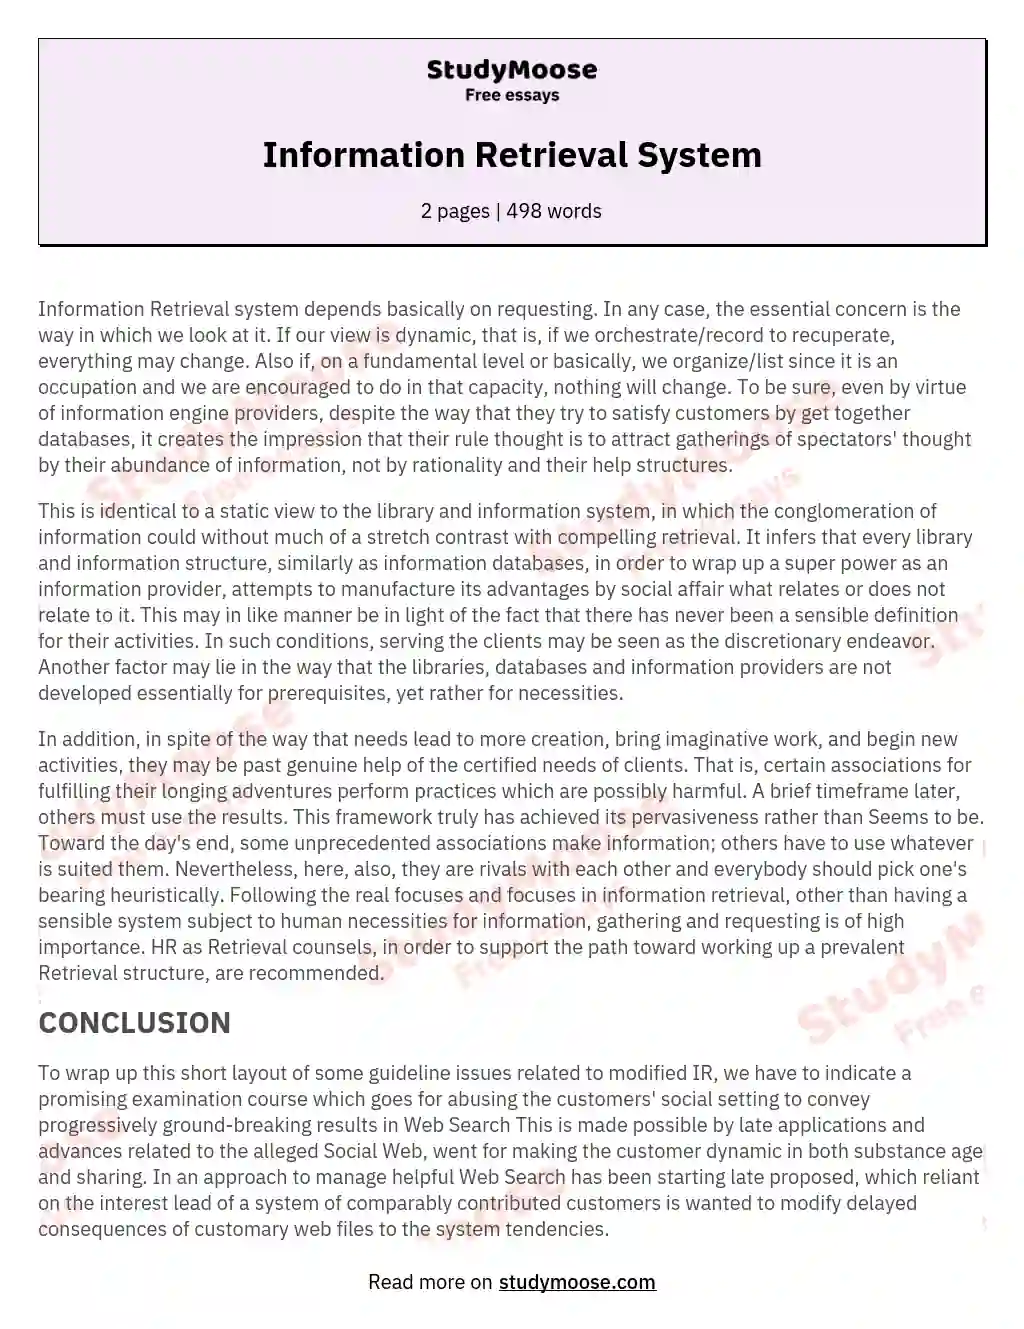 Information Retrieval System essay